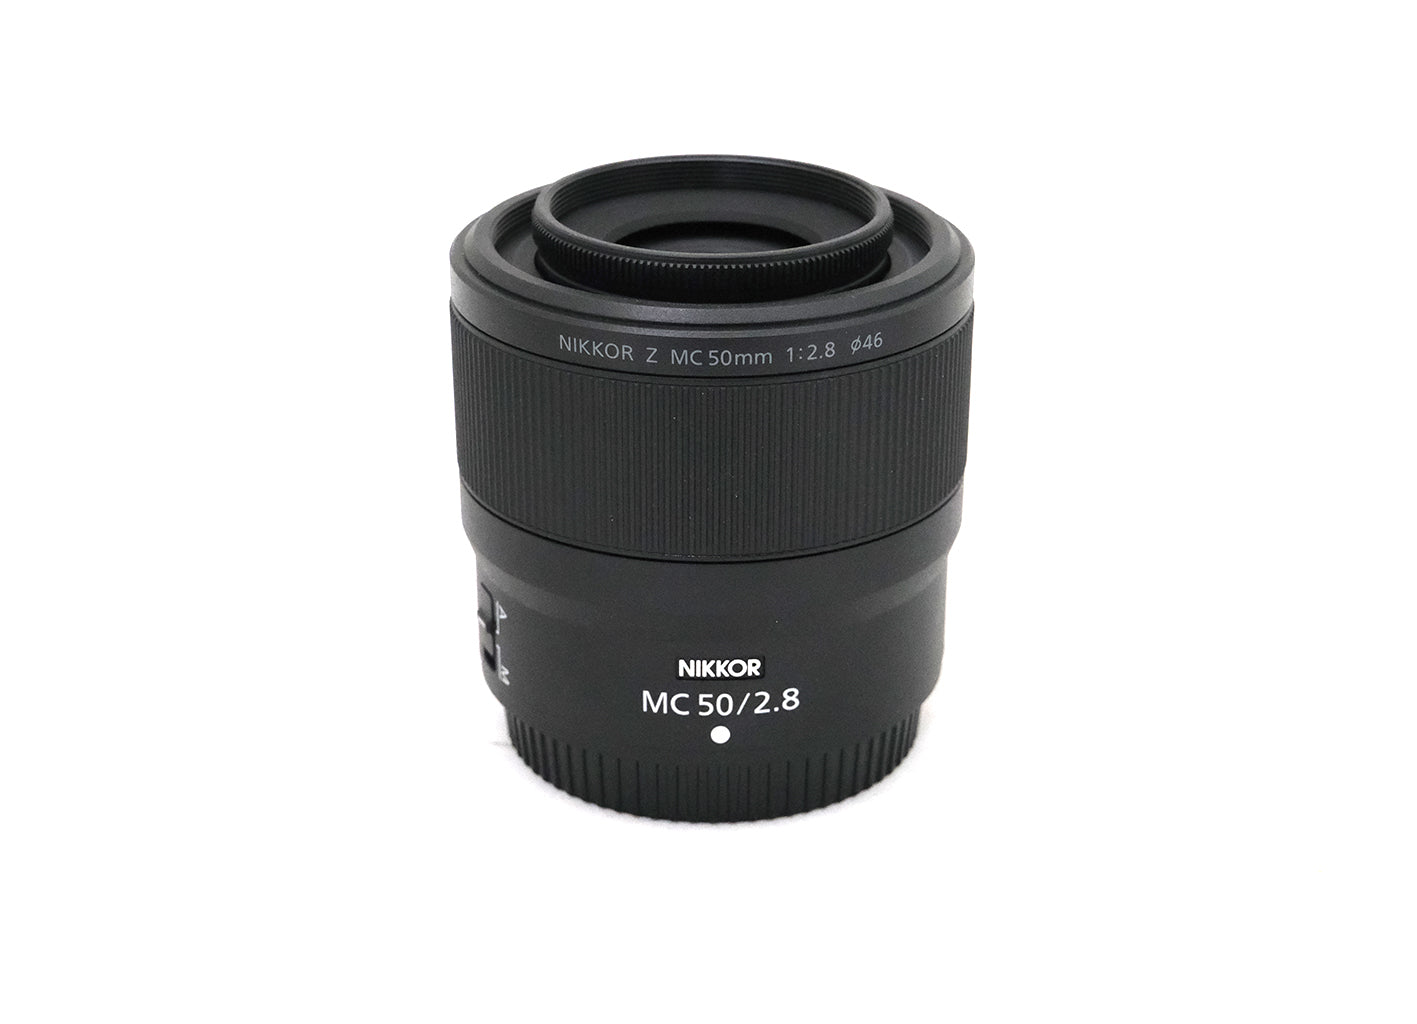 Nikon Z 50mm f/2.8 MC Micro